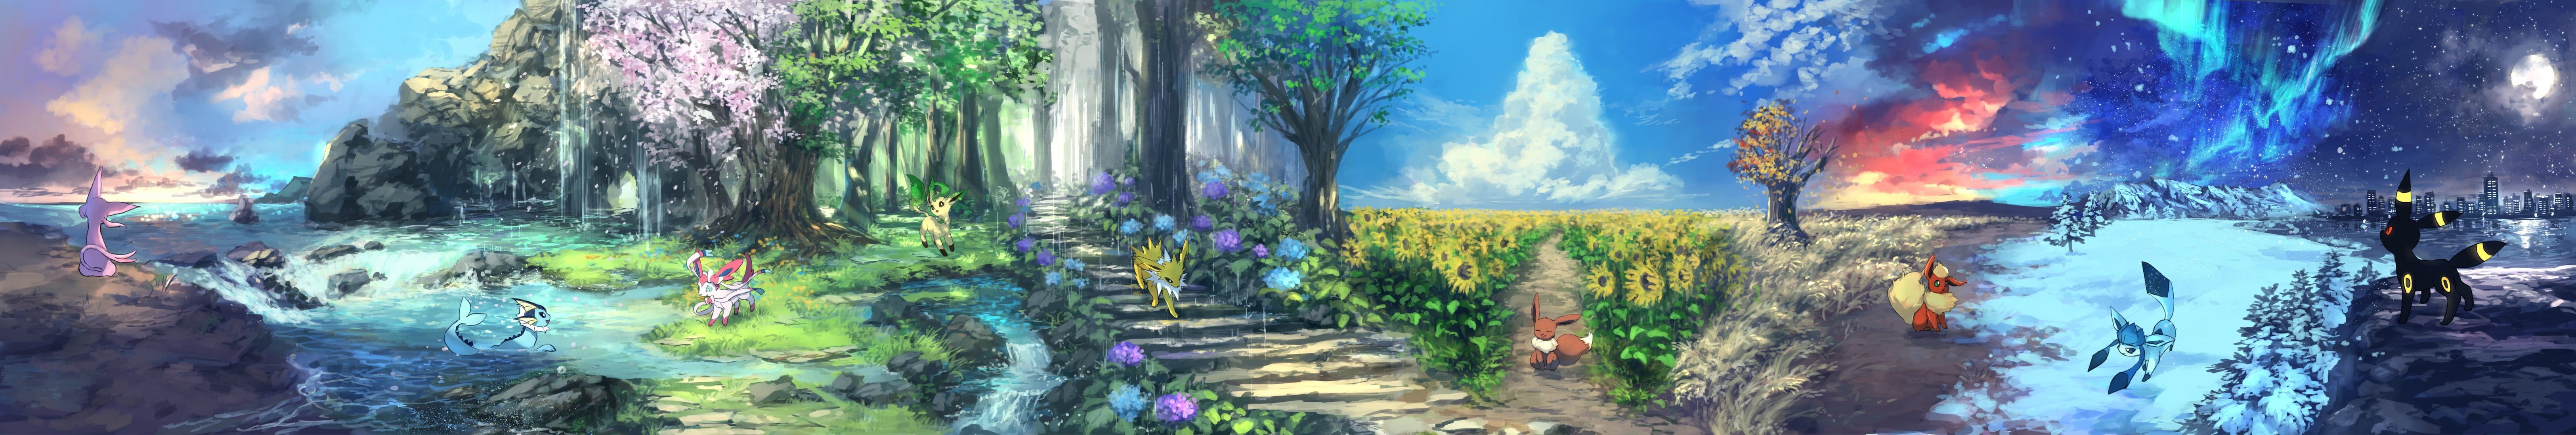 Pokemon Dual Monitor Wallpaper Cute Pokemon Dual Screen Wallpaper (51 ...